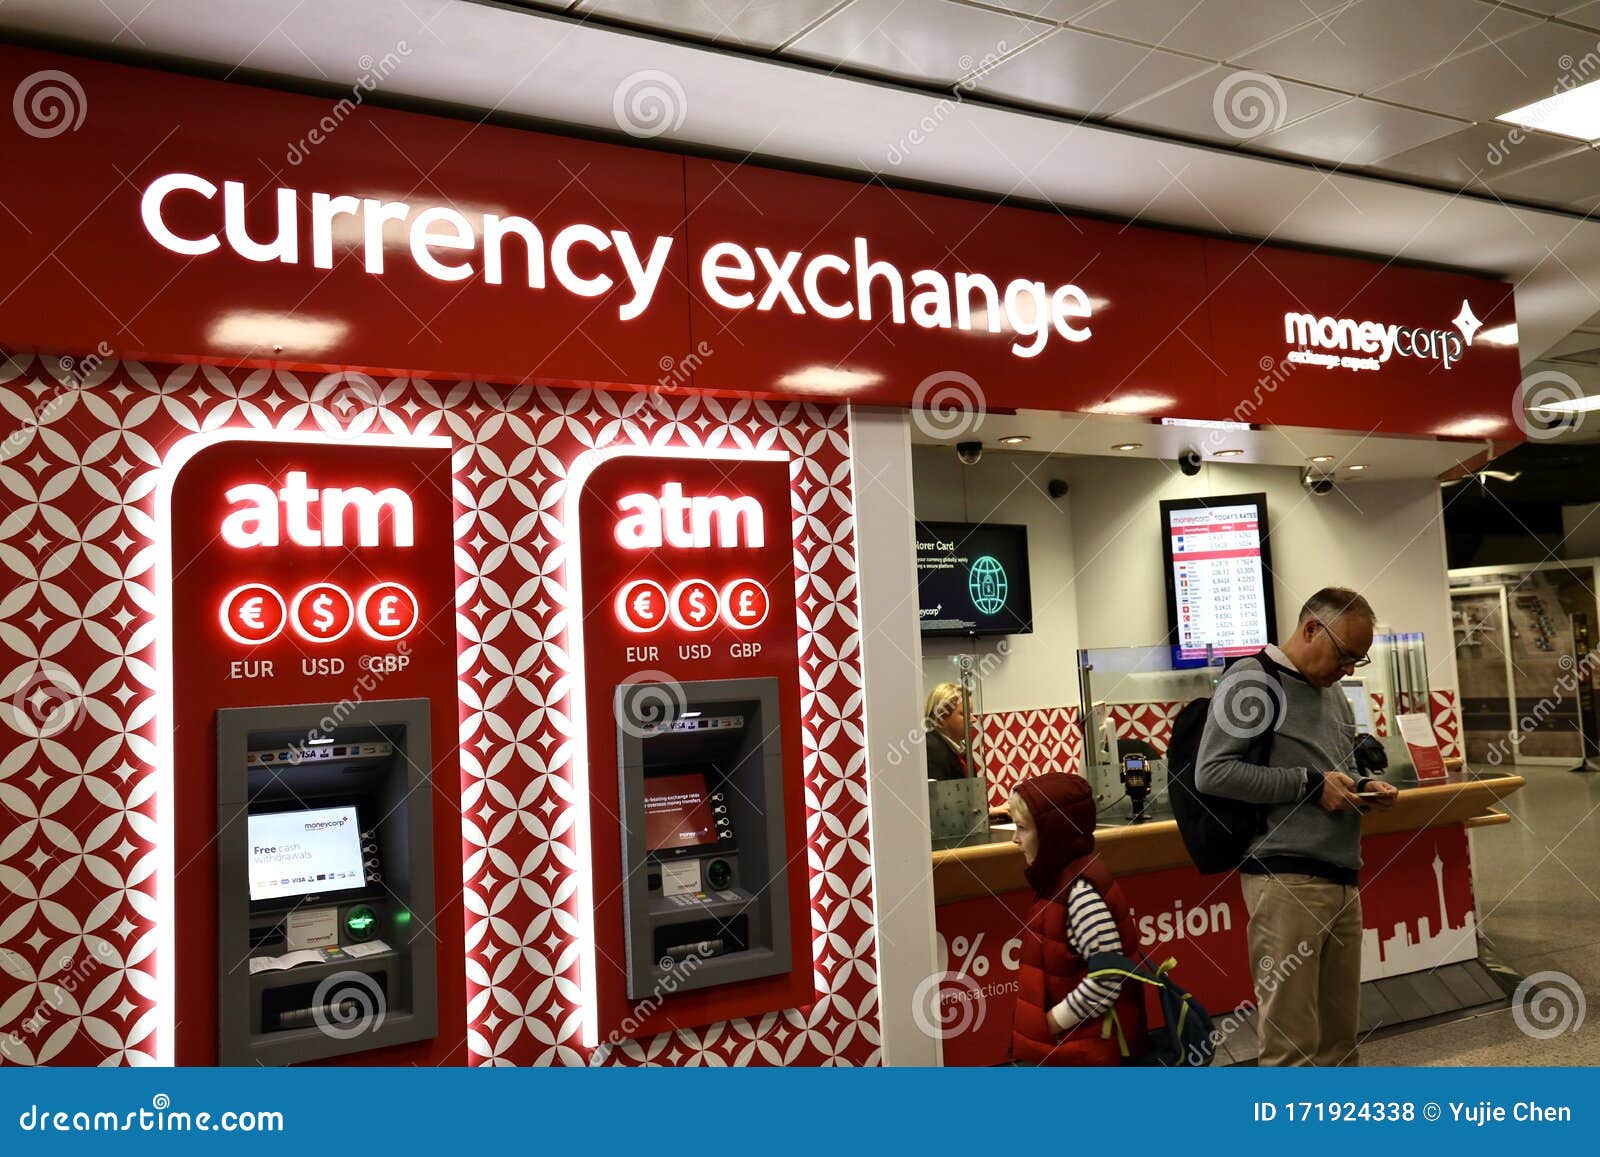 Currency exchange in delhi airport